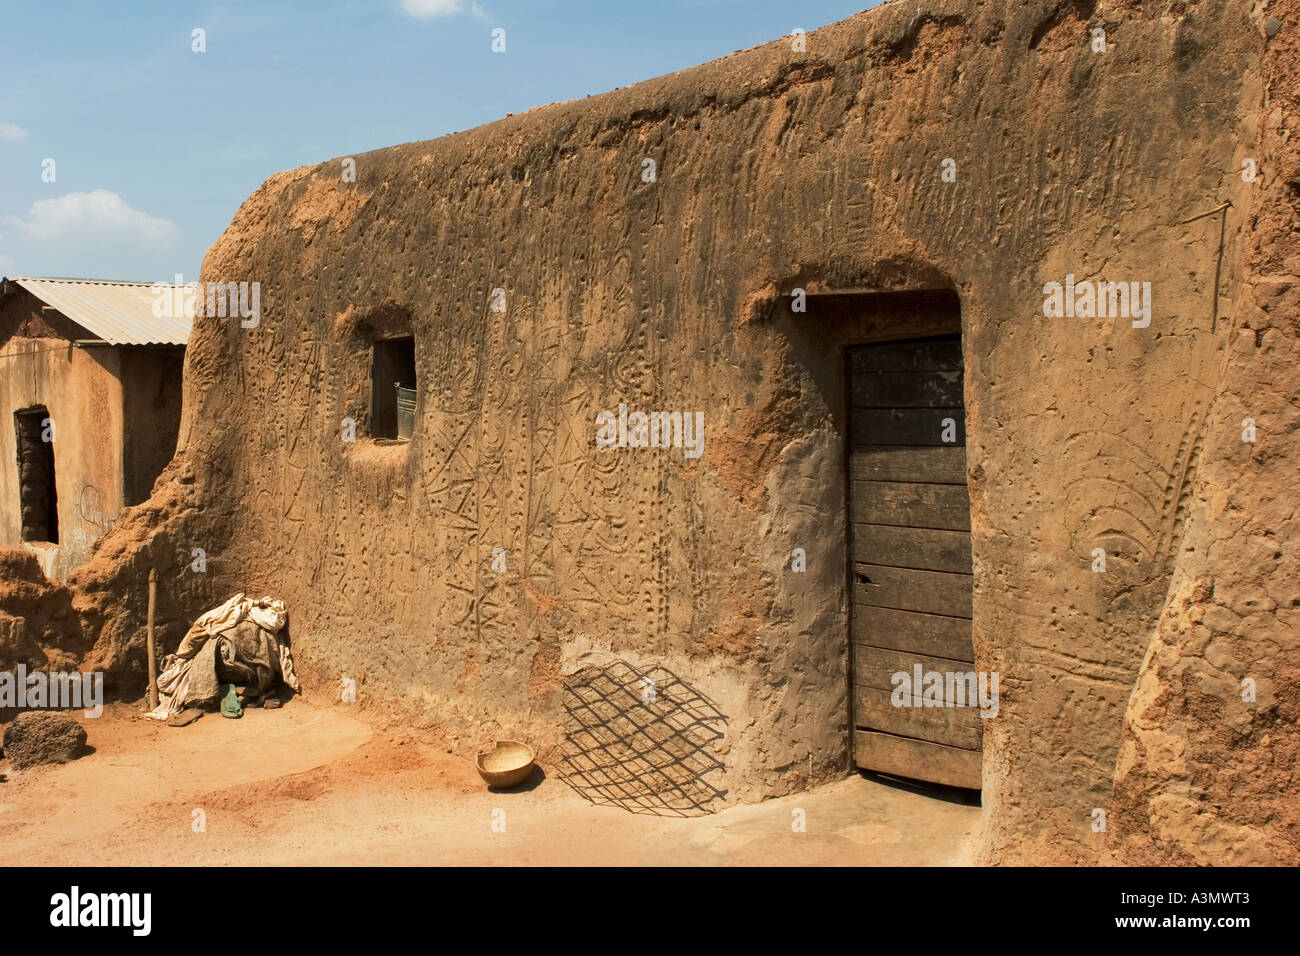 Village house Larabanga Ghana showing vernacular architecture with patterned mud wall Stock Photo